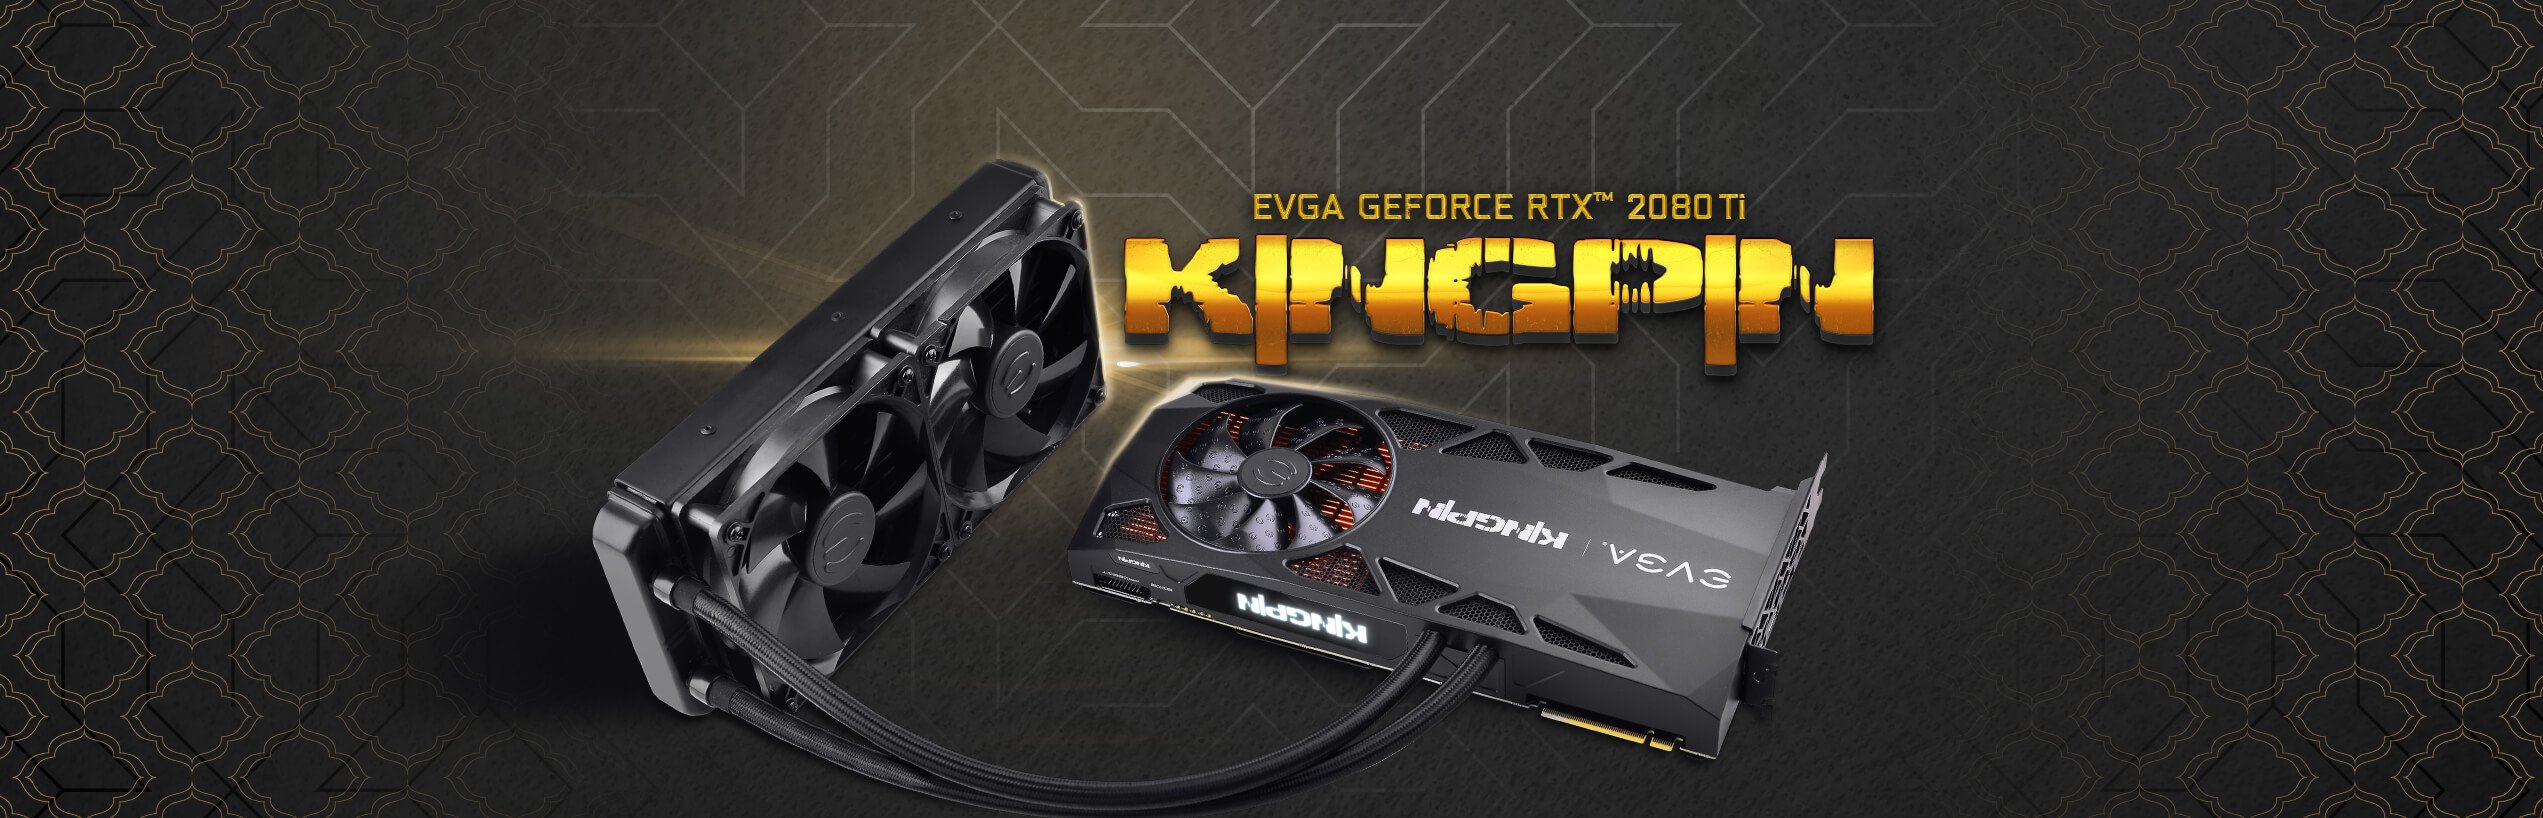 EVGA GeForce RTX™ 2080 Ti K|NGP|N